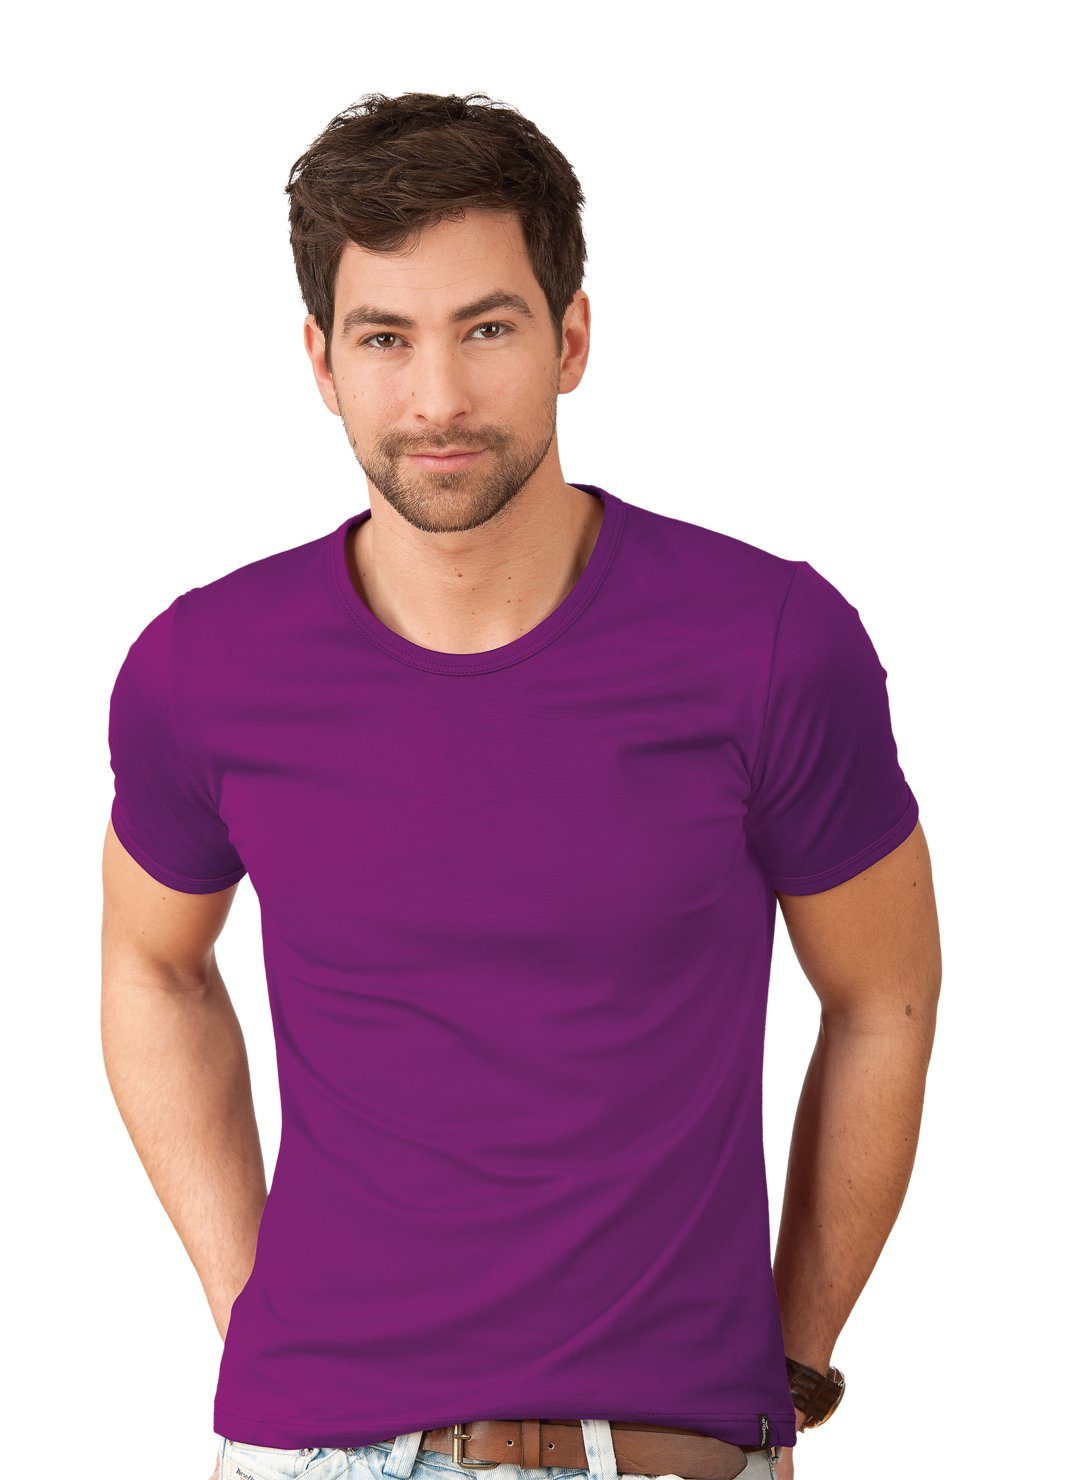 Trigema NU 15% KORTING: TRIGEMA T-shirt van fijne rib voor aangenaam draagcomfort